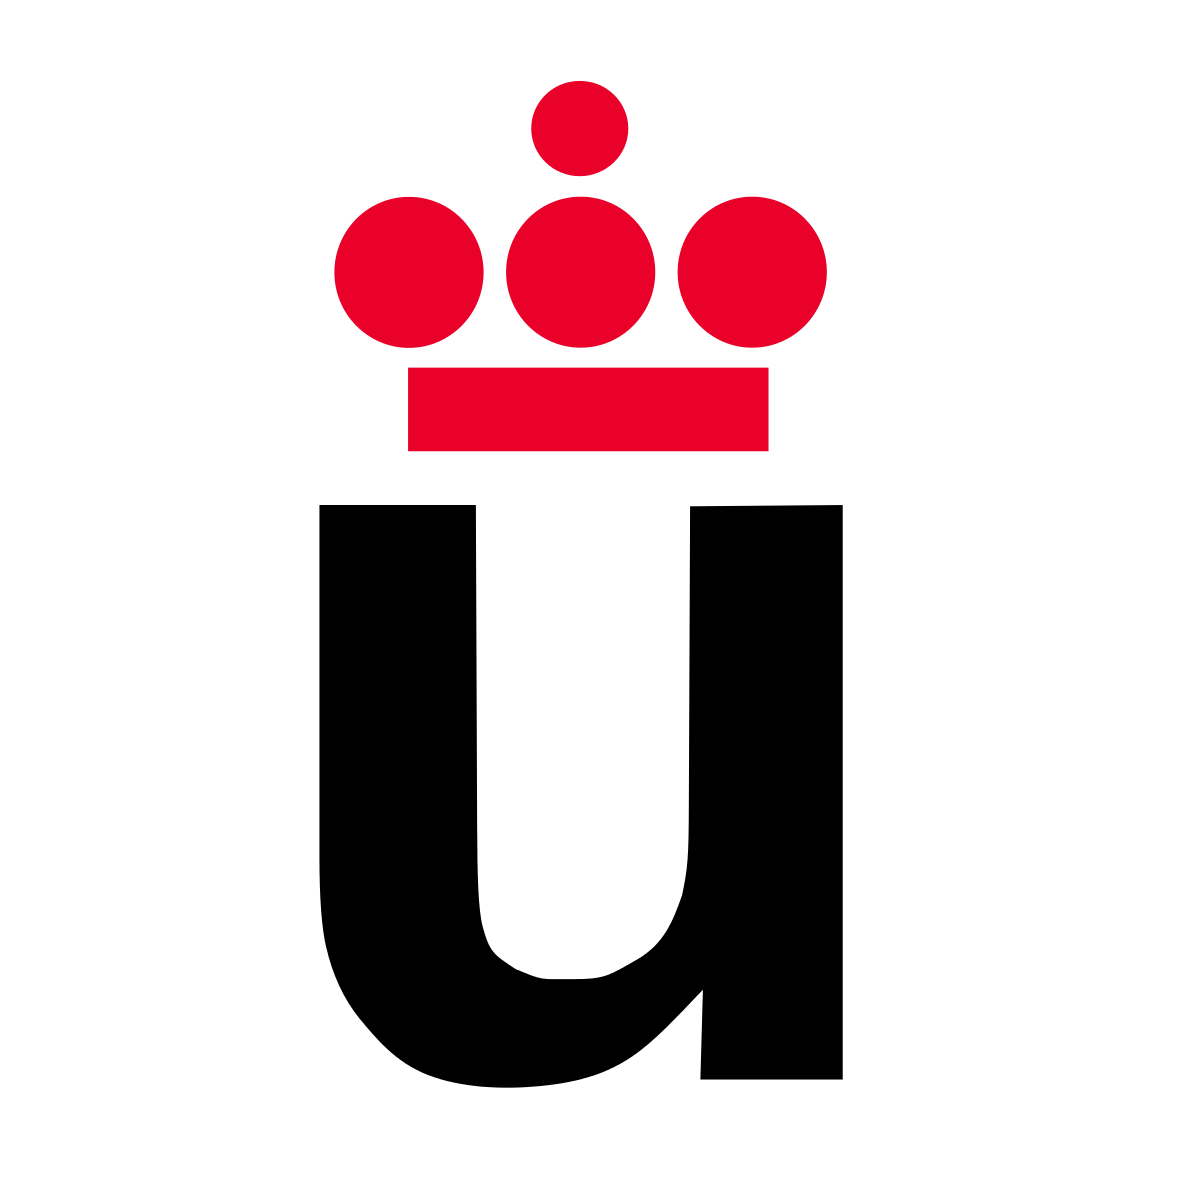 URJC logo